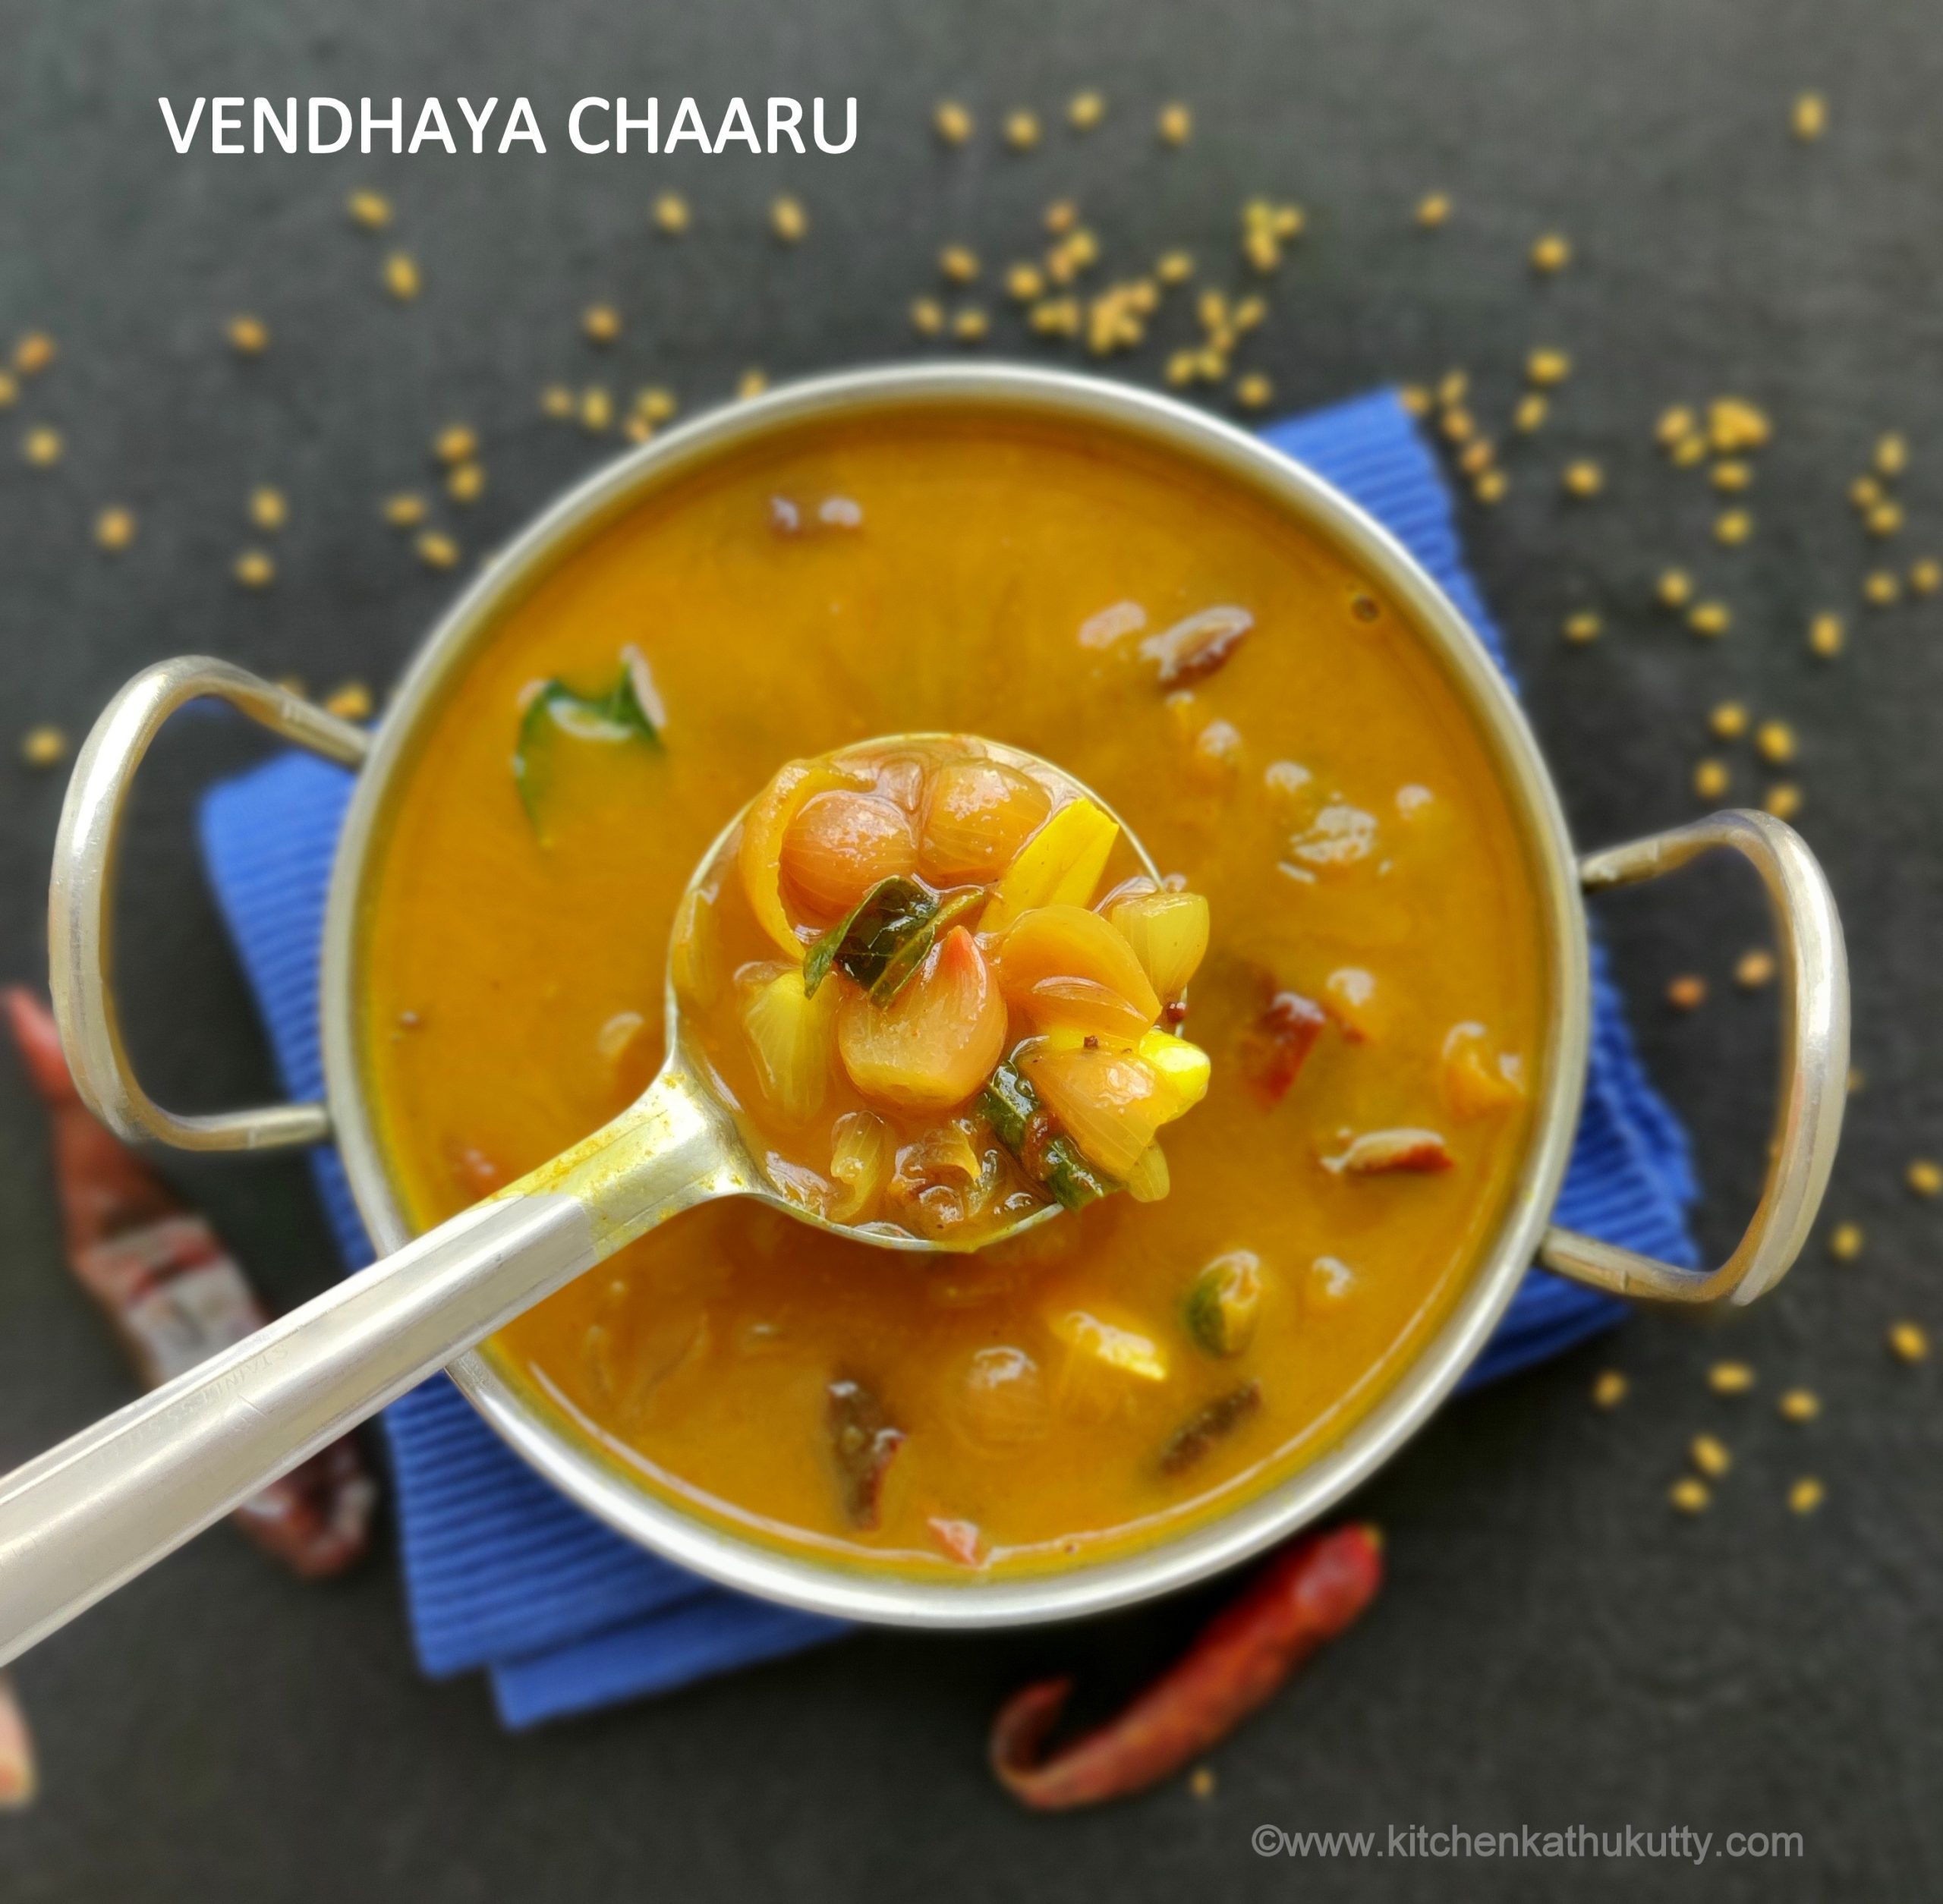 Vendhaya Chaaru recipe